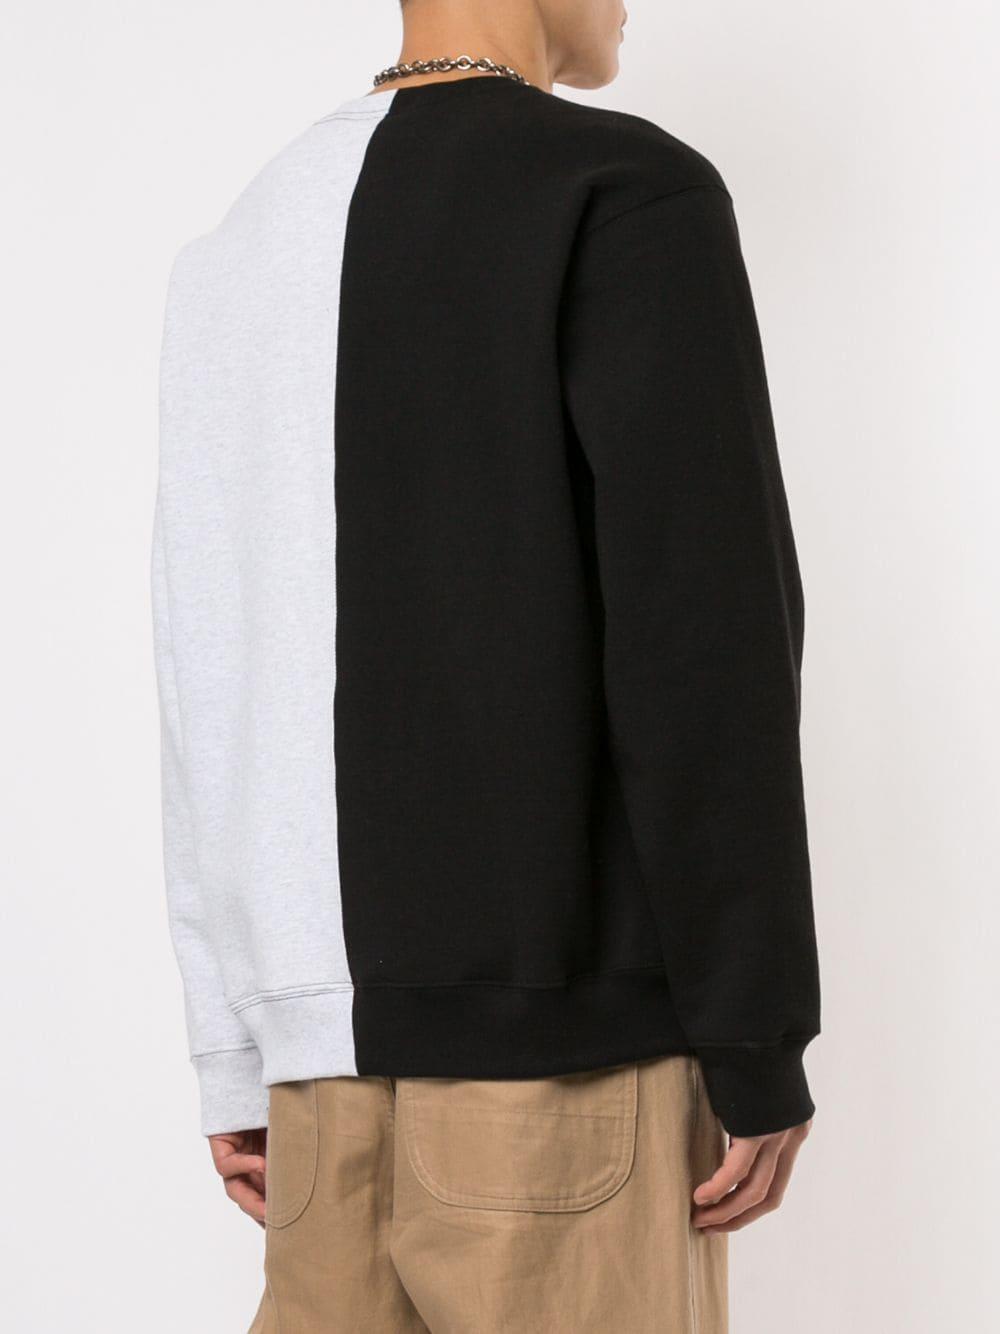 Supreme Cotton Split Crew Neck Sweatshirt in Black for Men - Lyst